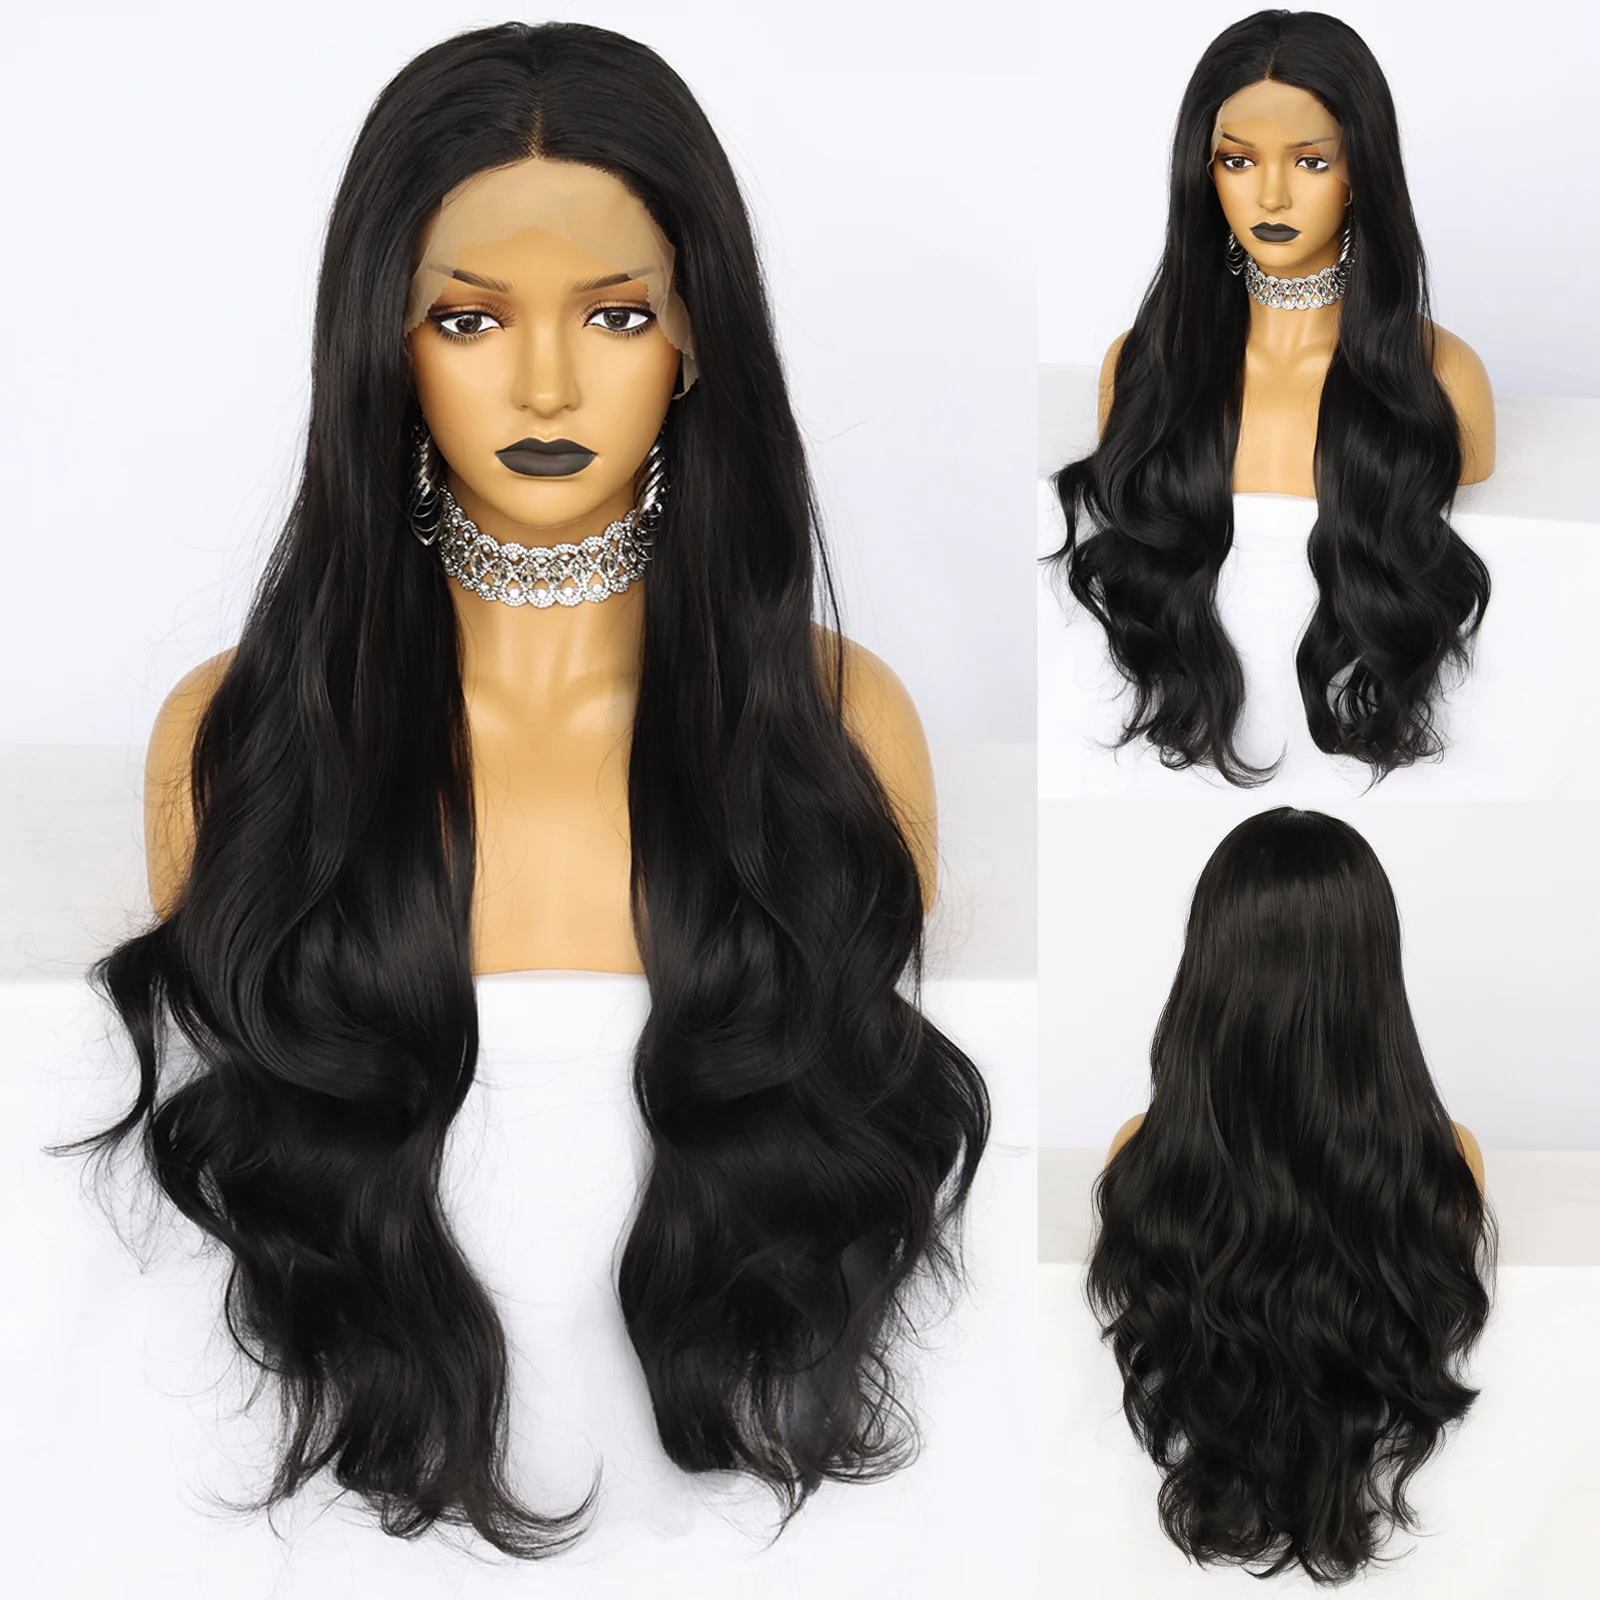 JONETING Long Wavy Wig T Part Black Heat Resistant Fiber Synthetic Lace Front Wigs for Women